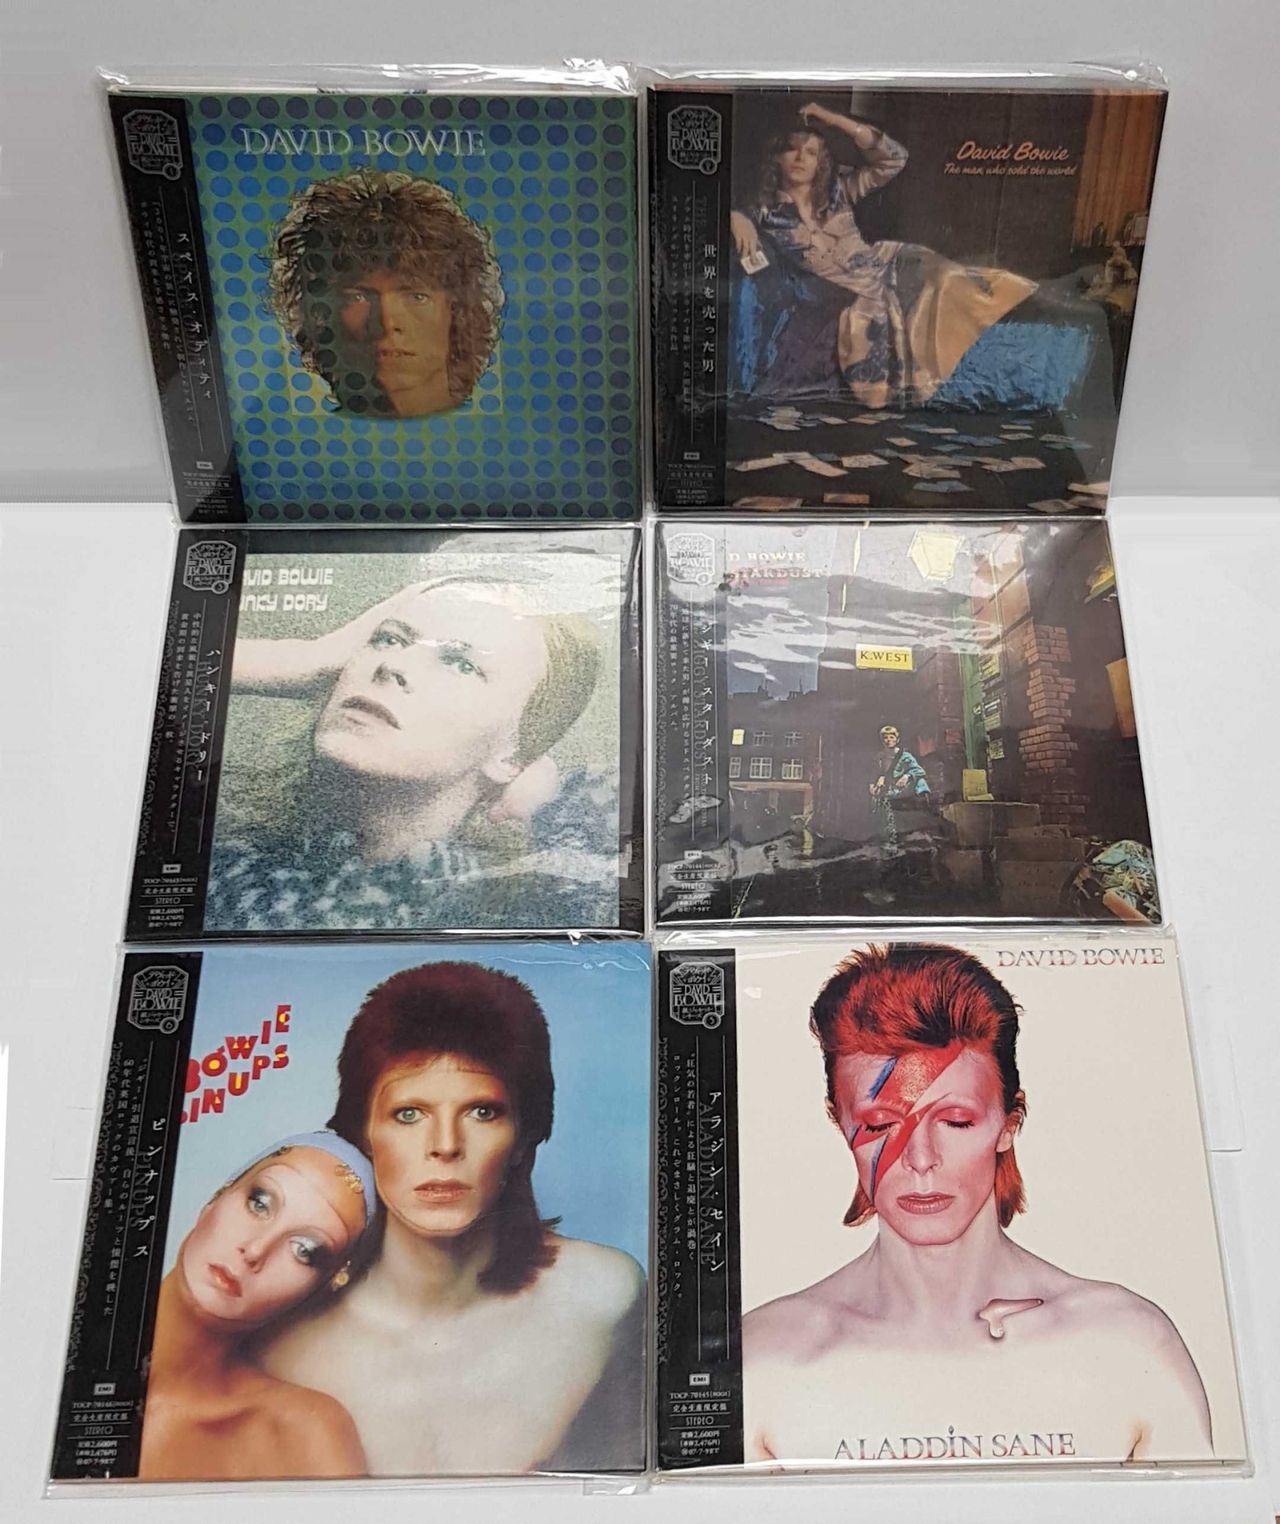 David Bowie Ziggy Stardust Box Set Japanese CD Album Box Set